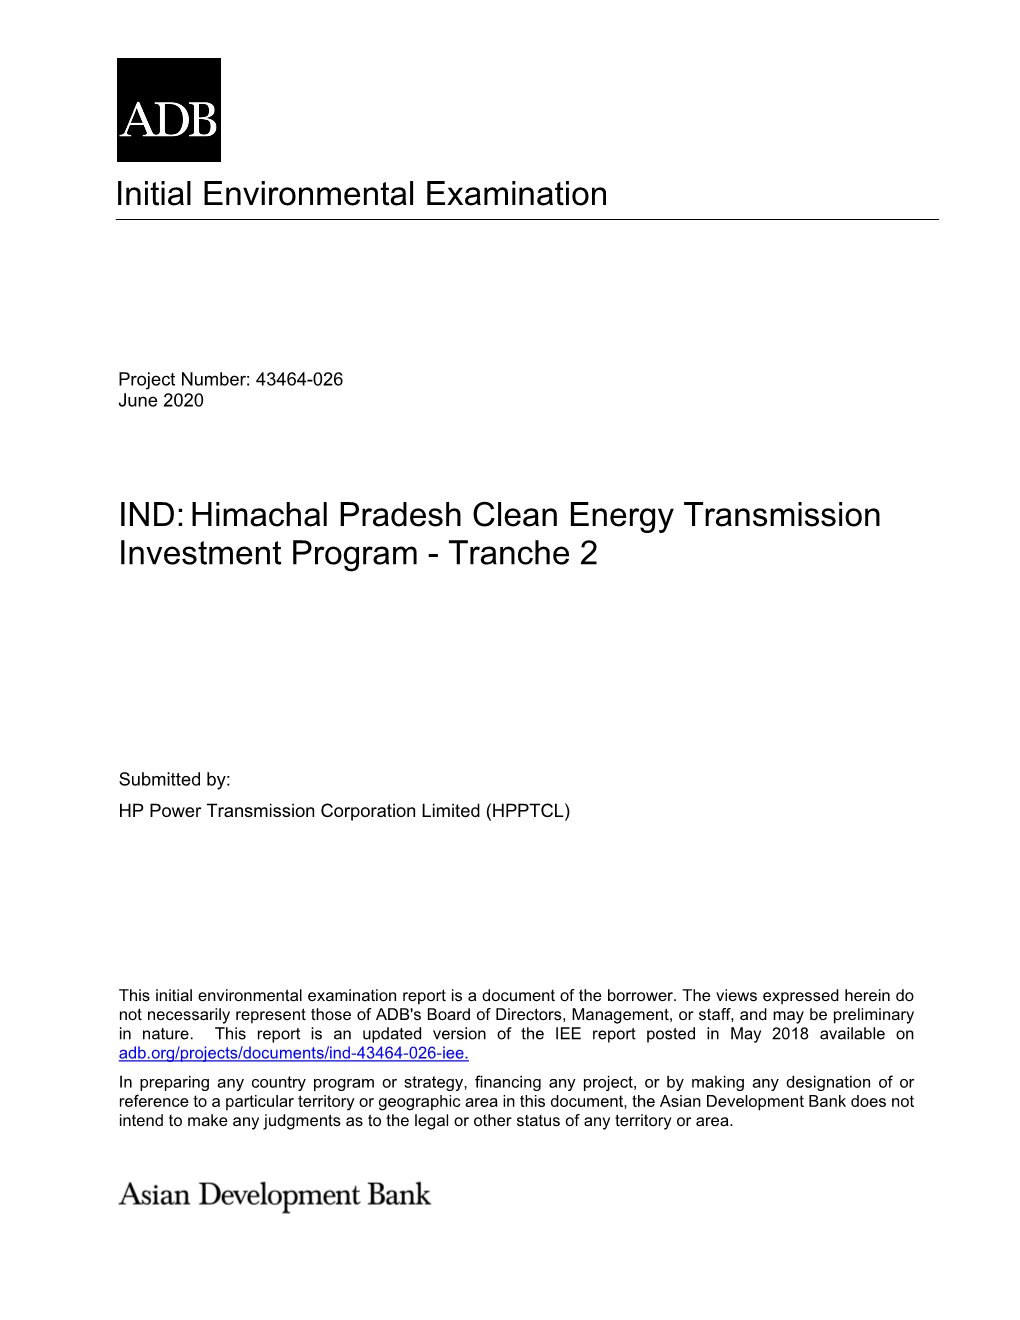 IND:Himachal Pradesh Clean Energy Transmission Investment Program